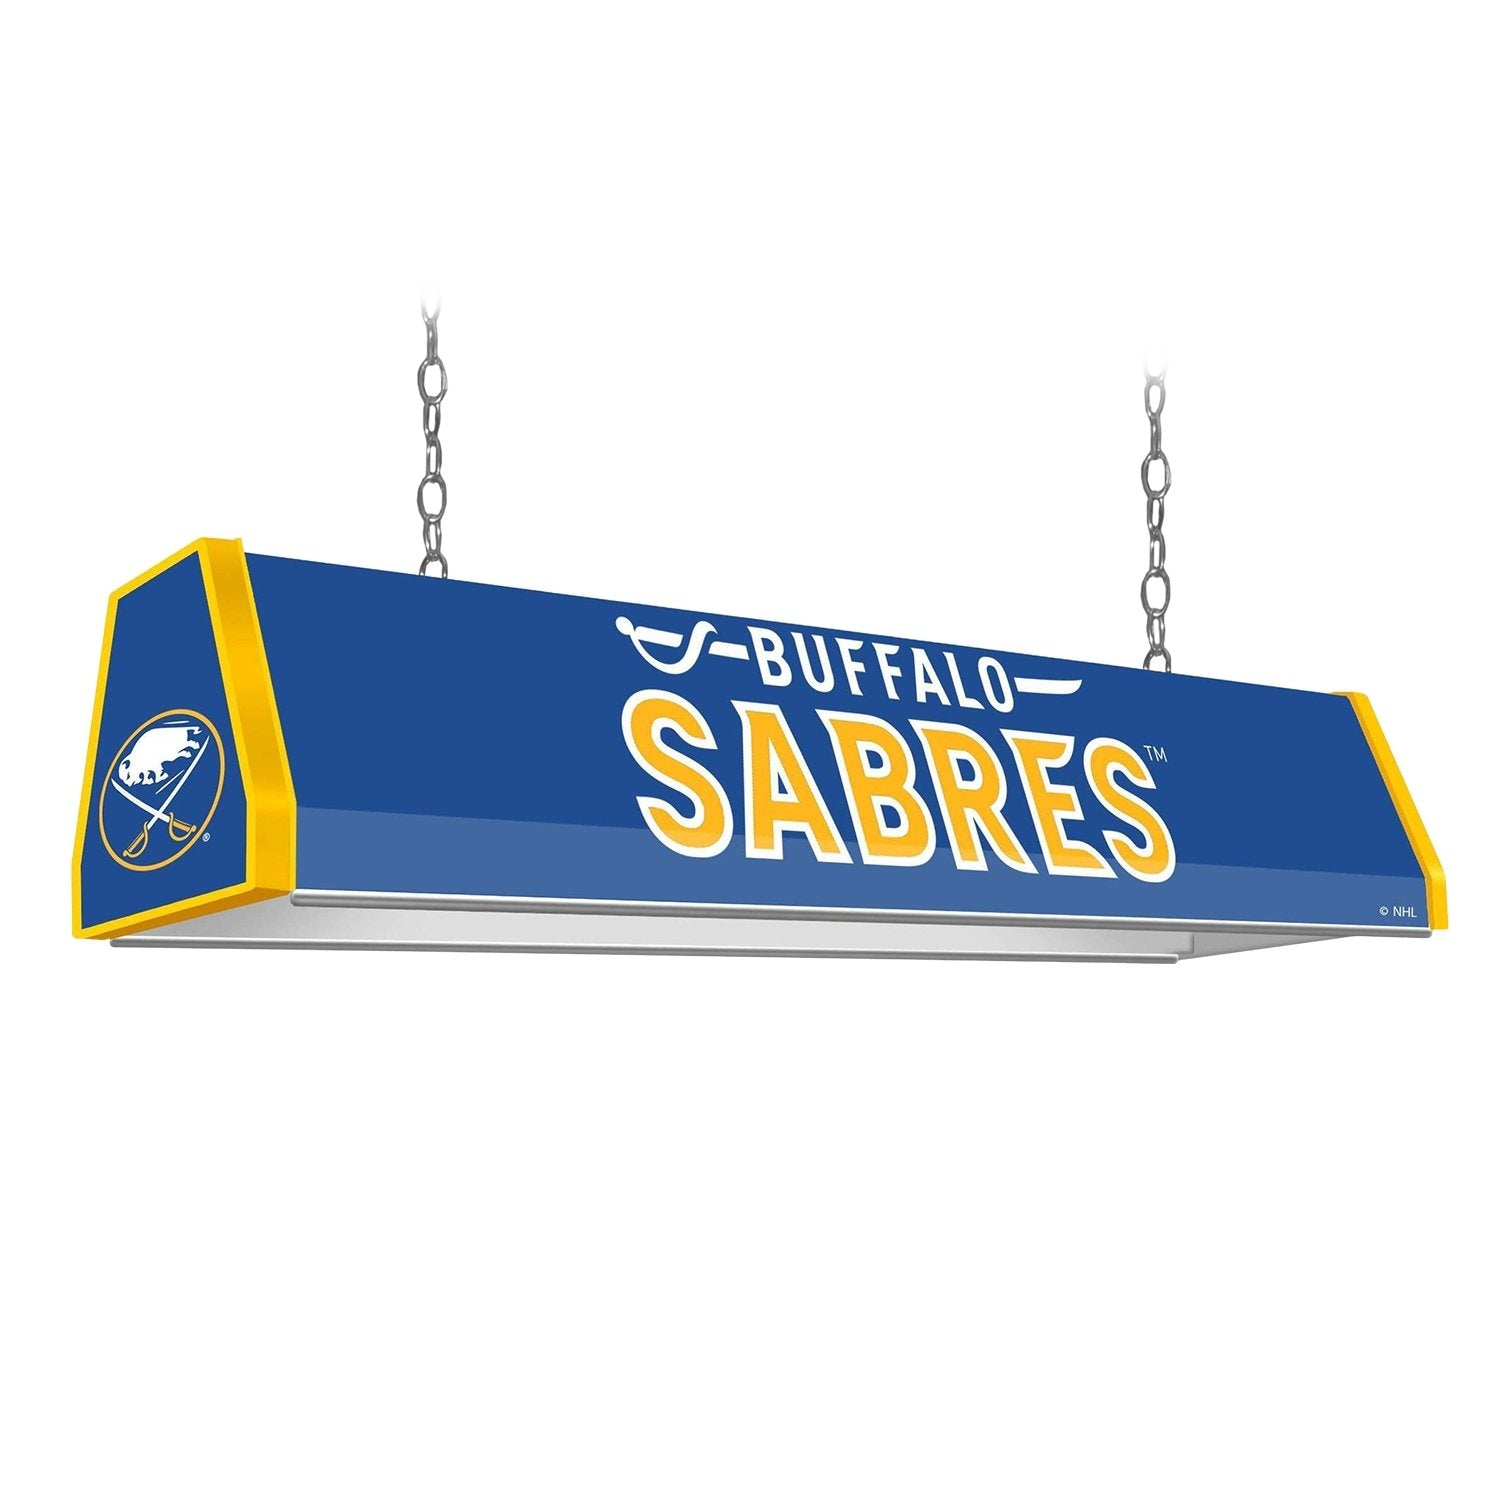 Buffalo Sabres Flags, Buffalo Sabres Banners